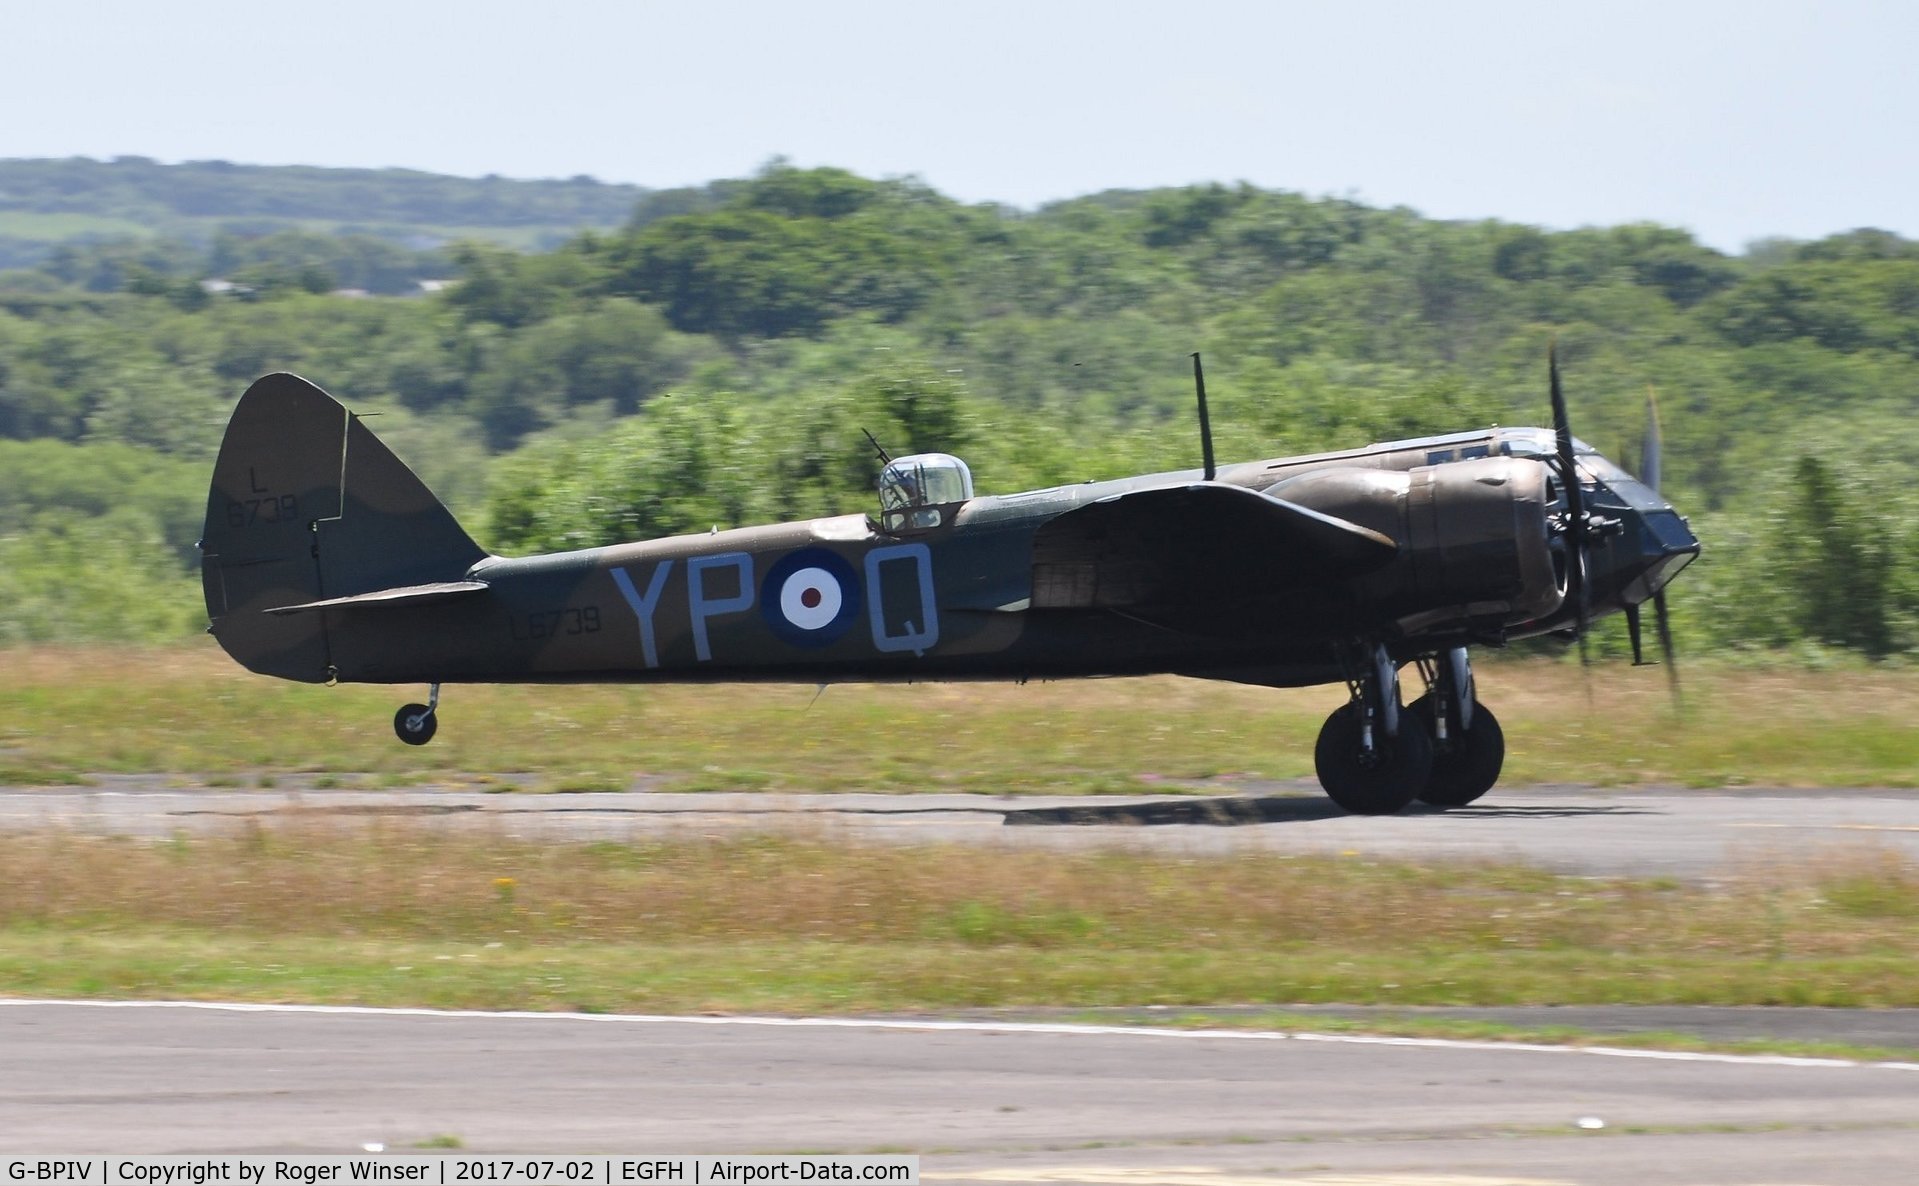 G-BPIV, 1943 Bristol 149 Bolingbroke Mk.IVT C/N 10201, In the Markings of Bristol Blenheim 1f aircraft L6739 coded YP-Q of 23 Squadron RAF.